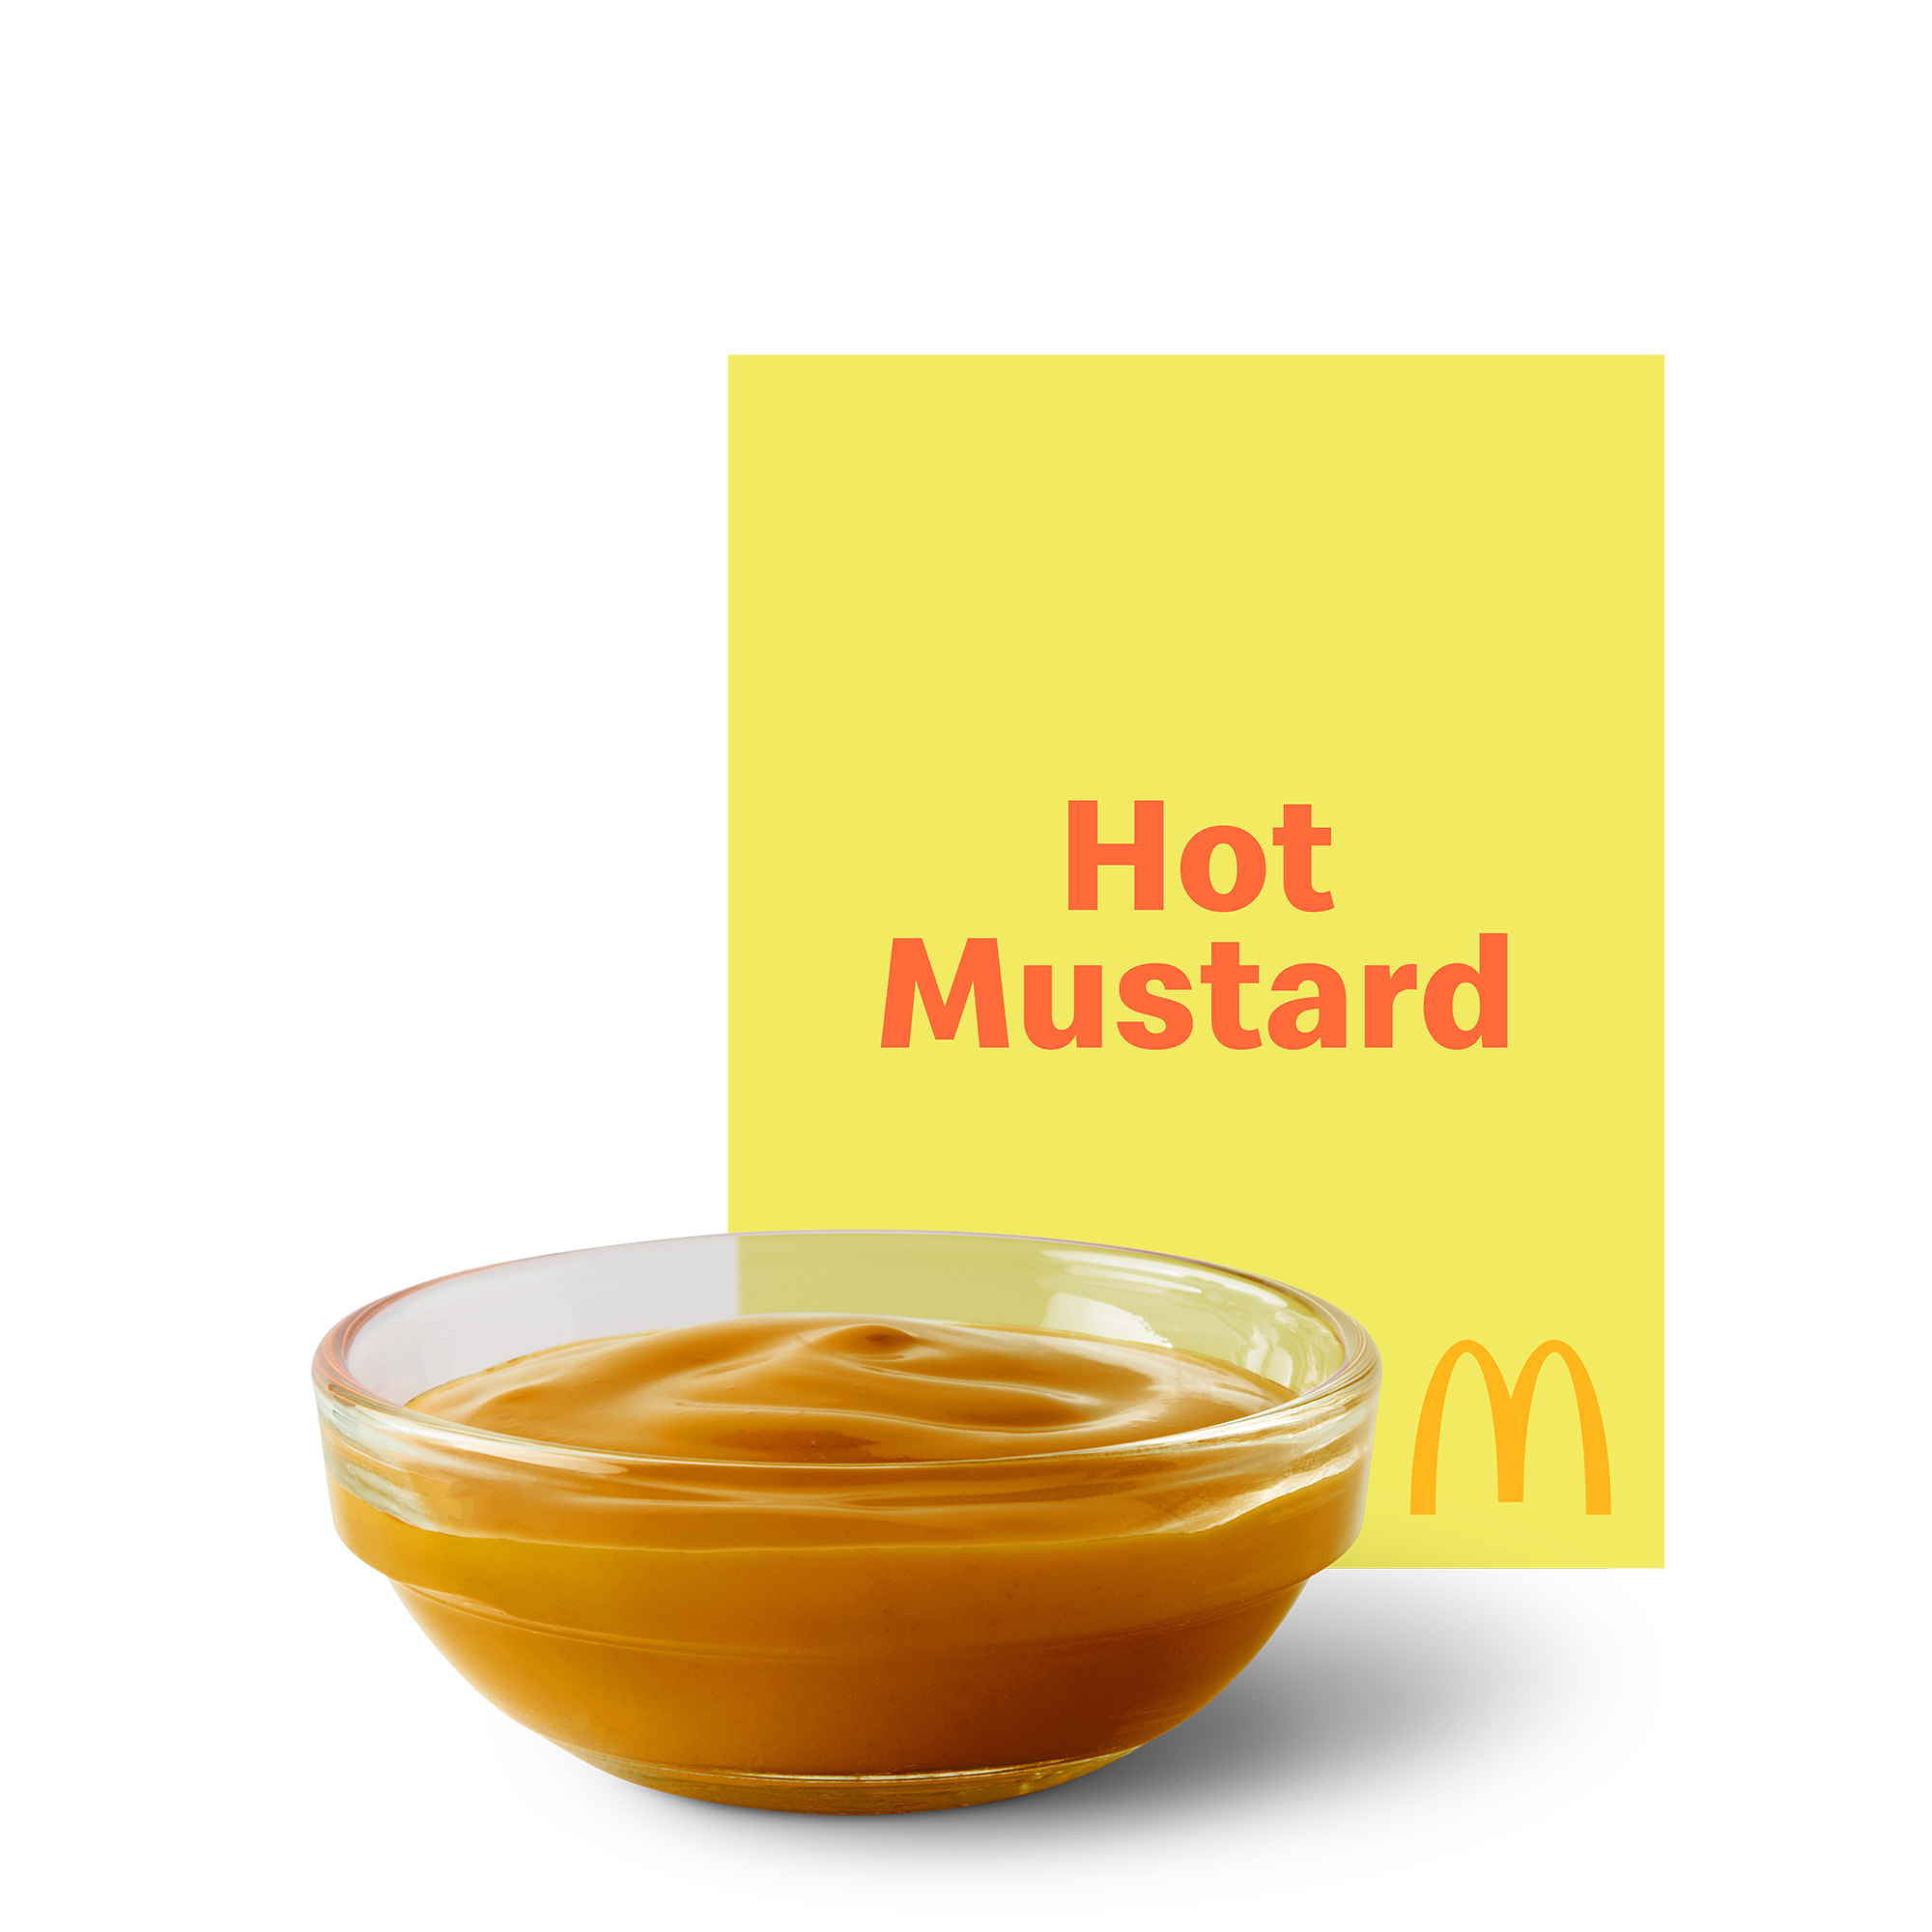 Hot Mustard Dipping Sauce